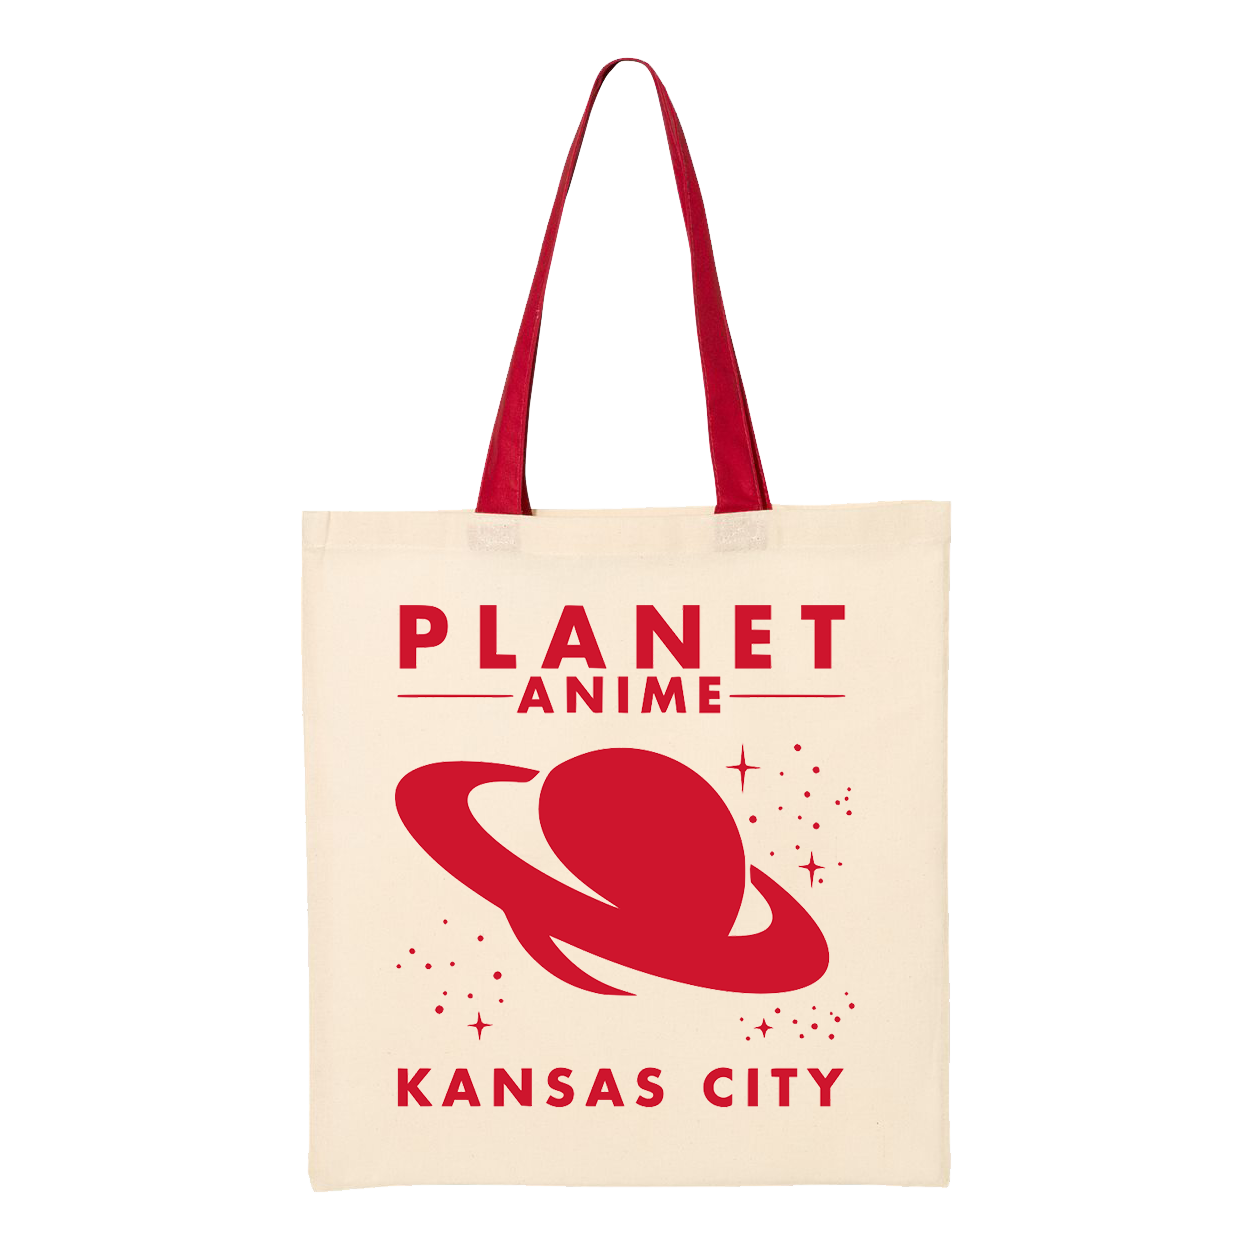 Planet Anime | Contrast Handle Tote Bag